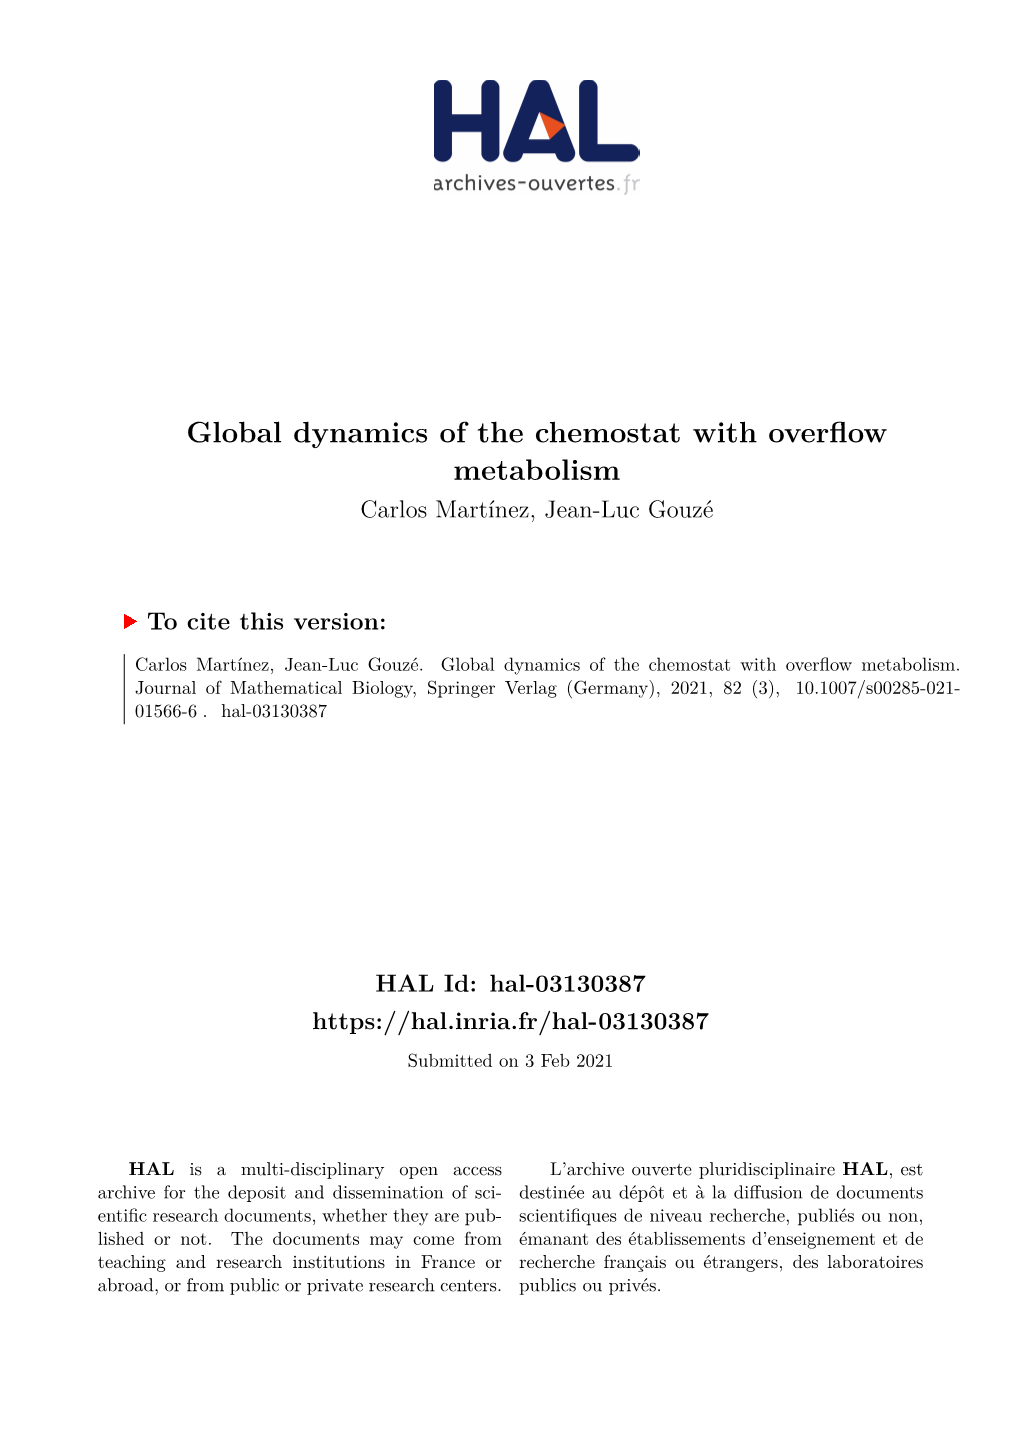 Global Dynamics of the Chemostat with Overflow Metabolism Carlos Martínez, Jean-Luc Gouzé